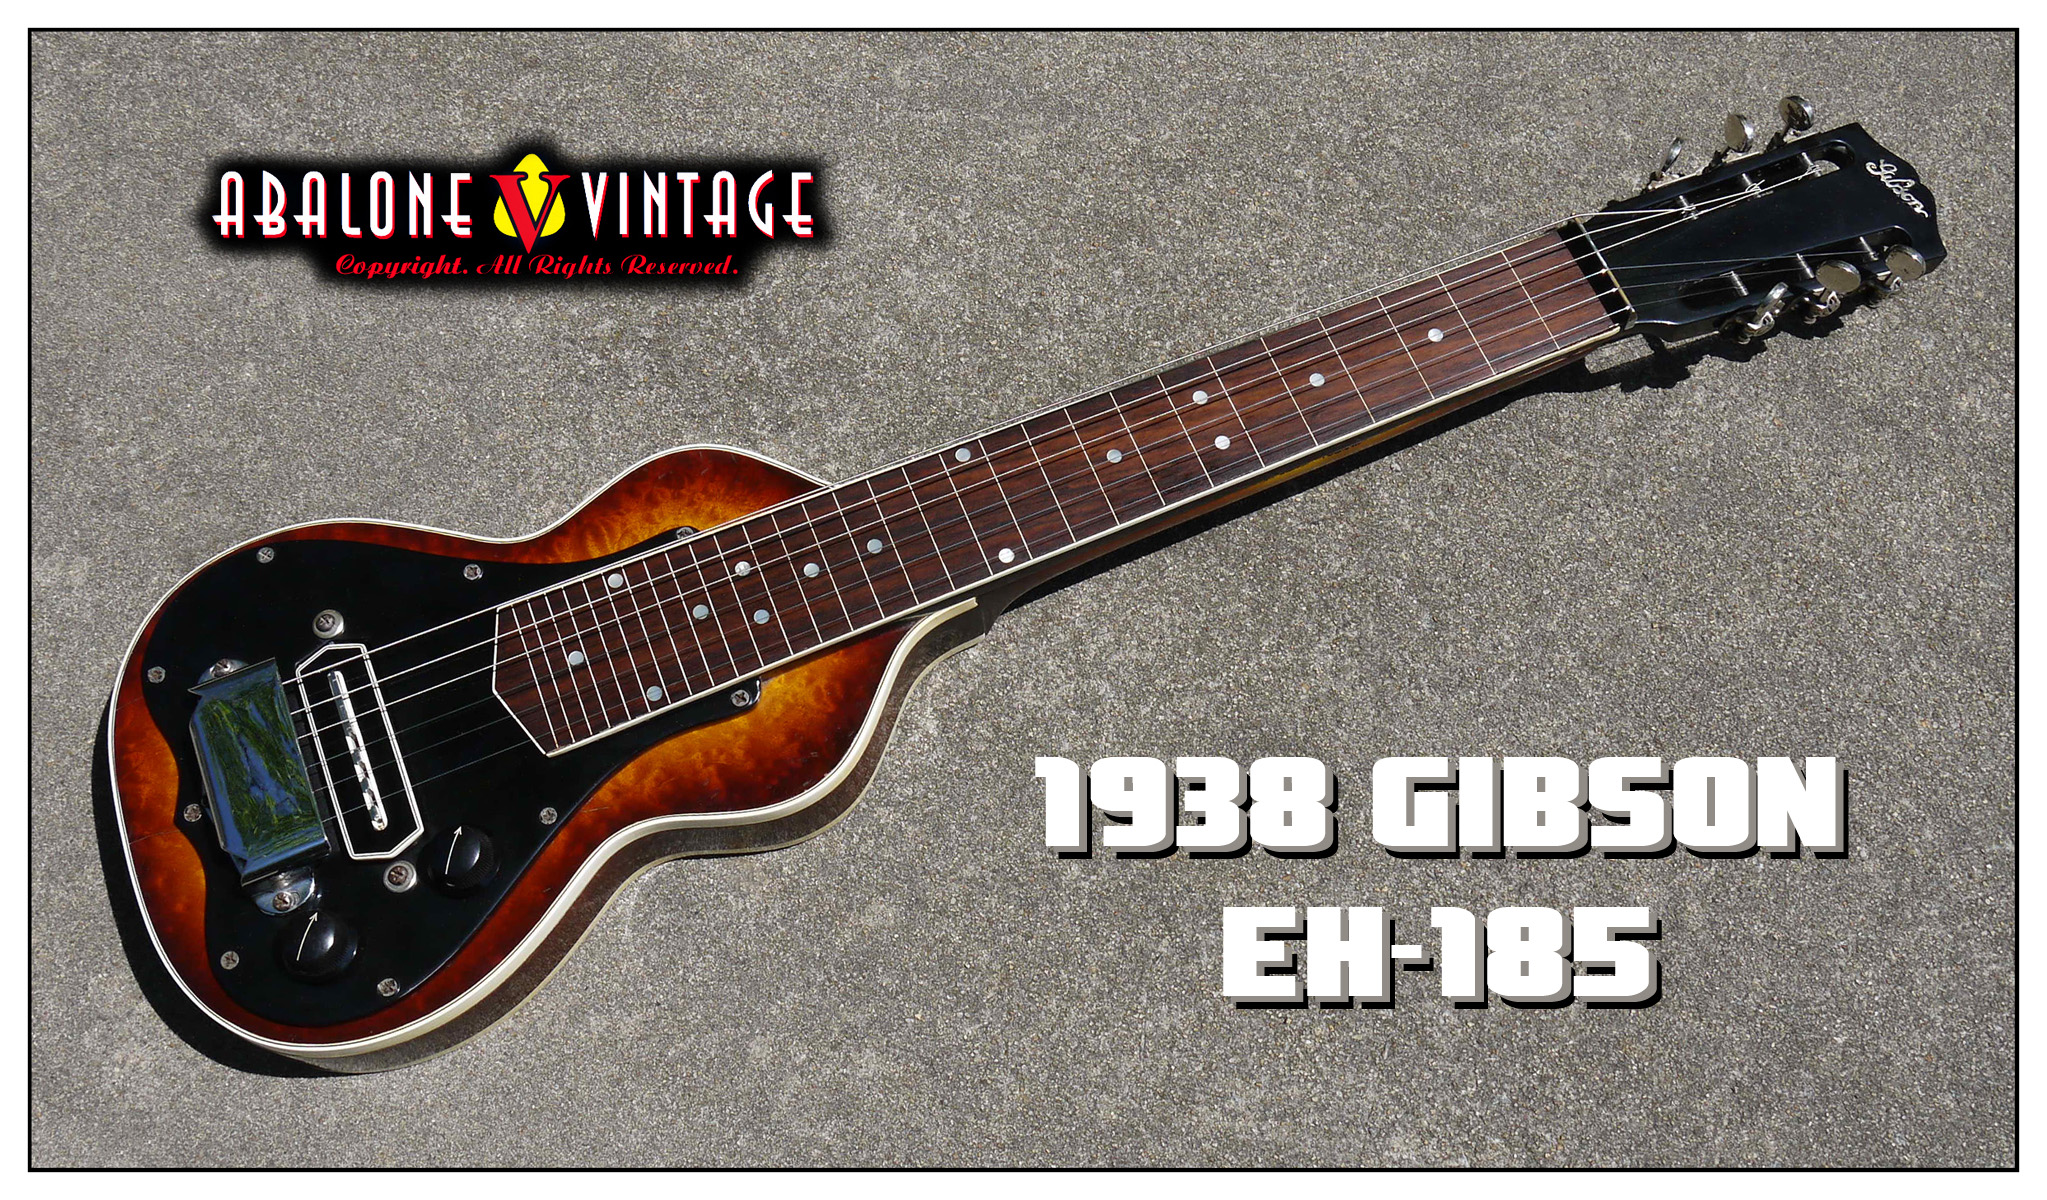 1938_gibson_eh-185_neck_lap_steel_guitar_double.jpg